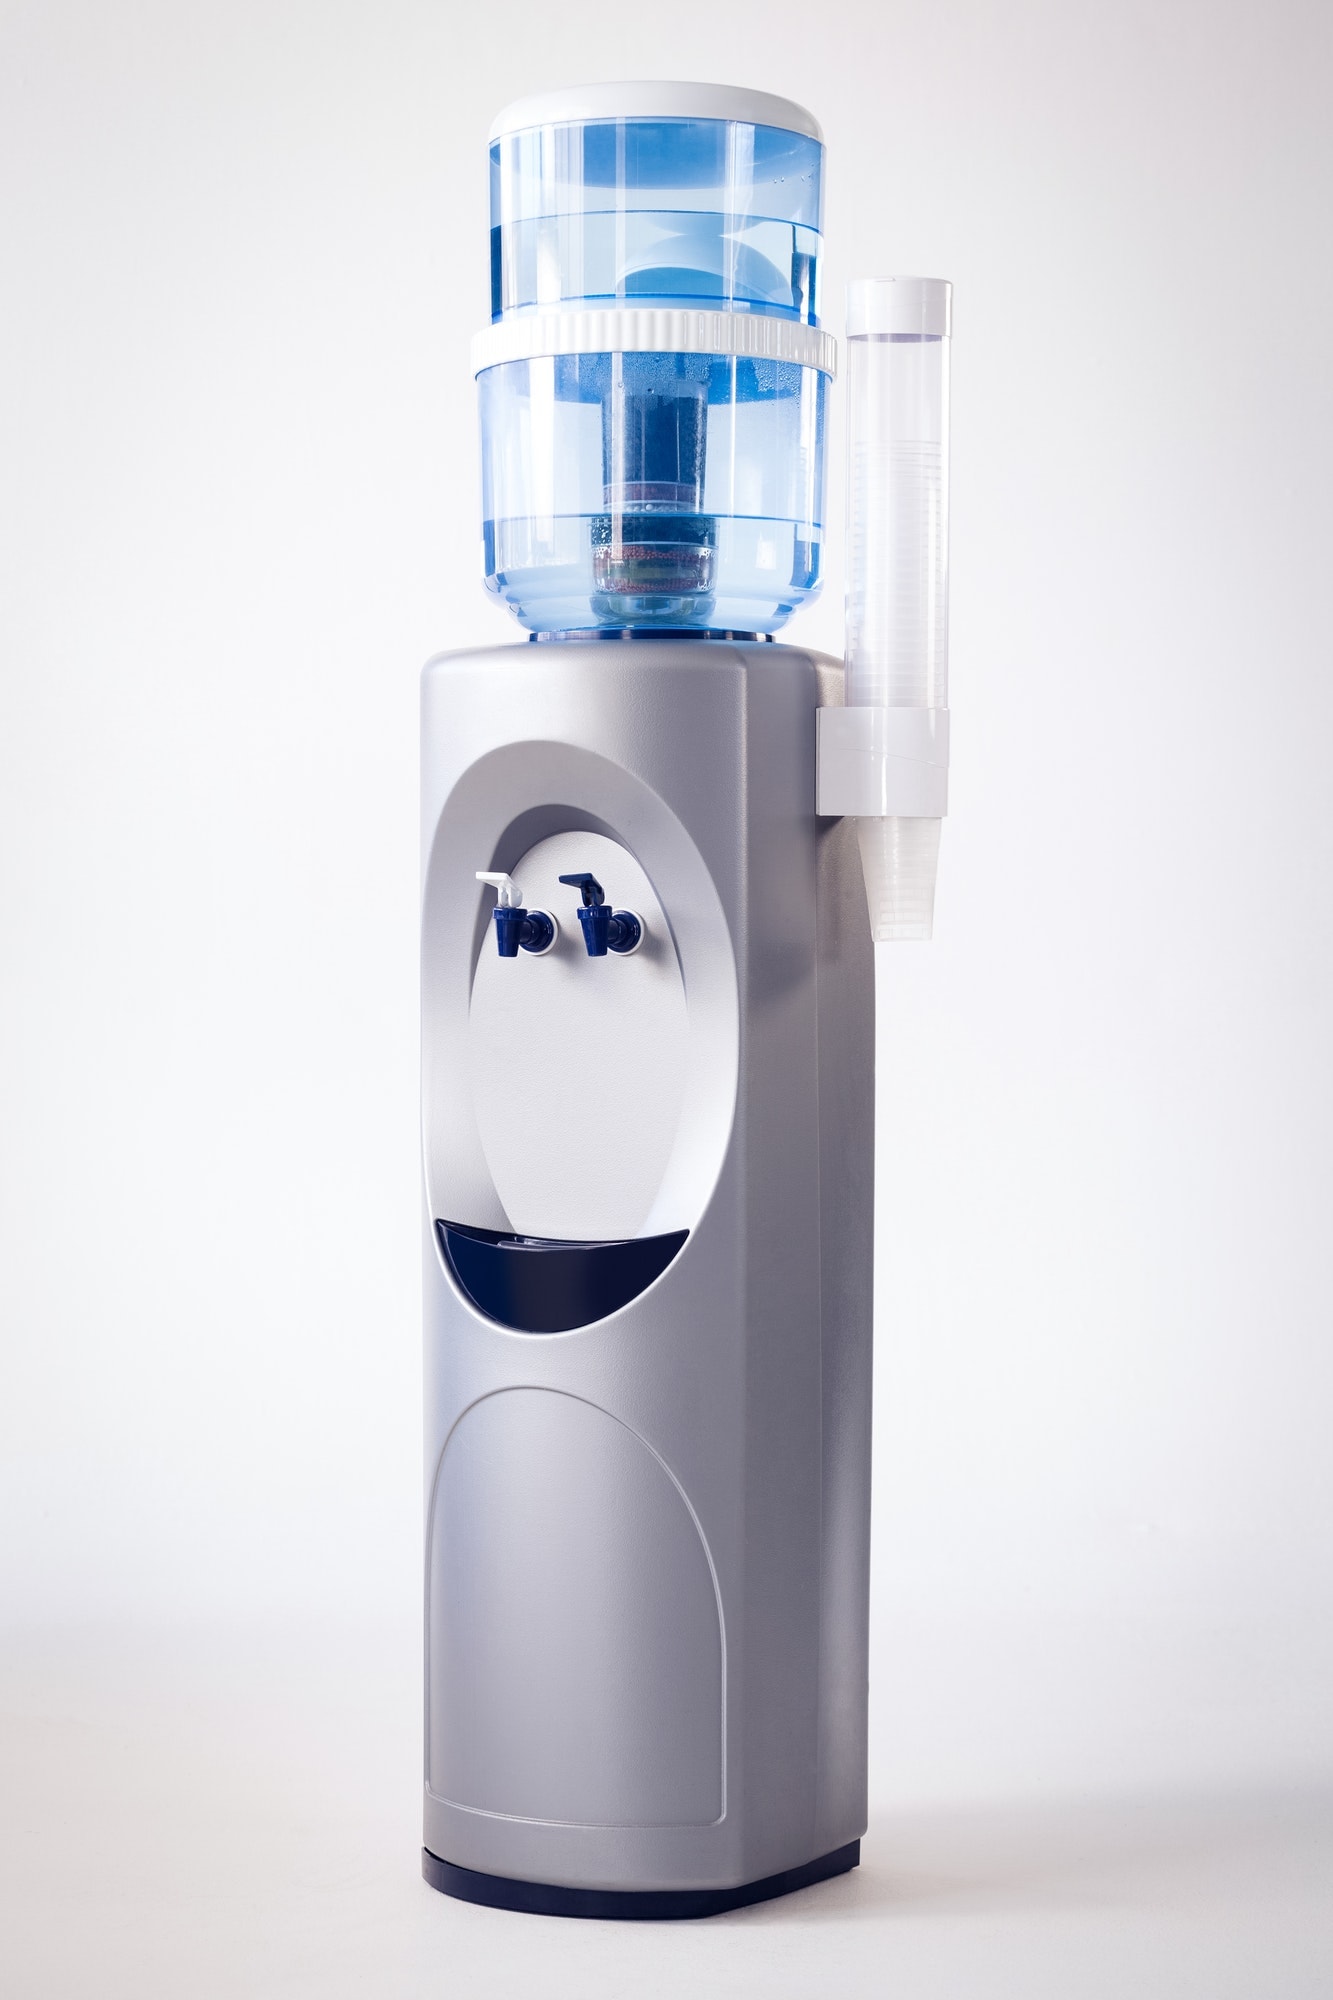 Water dispenser on white background